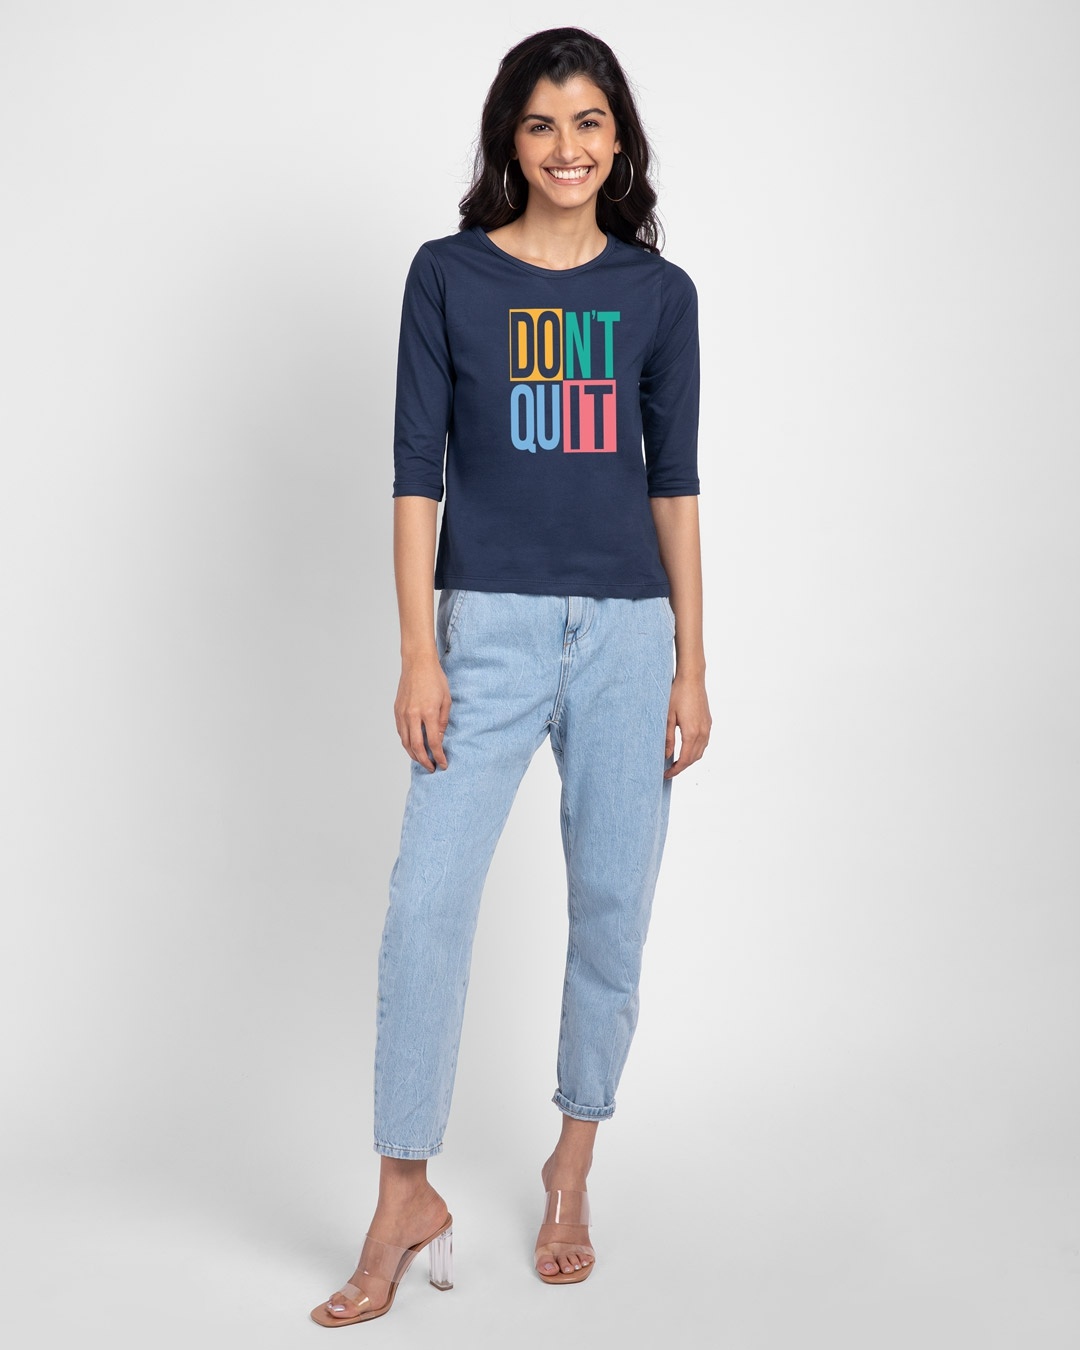 Shop Don't Block Round Neck 3/4th Sleeve T-Shirt-Design